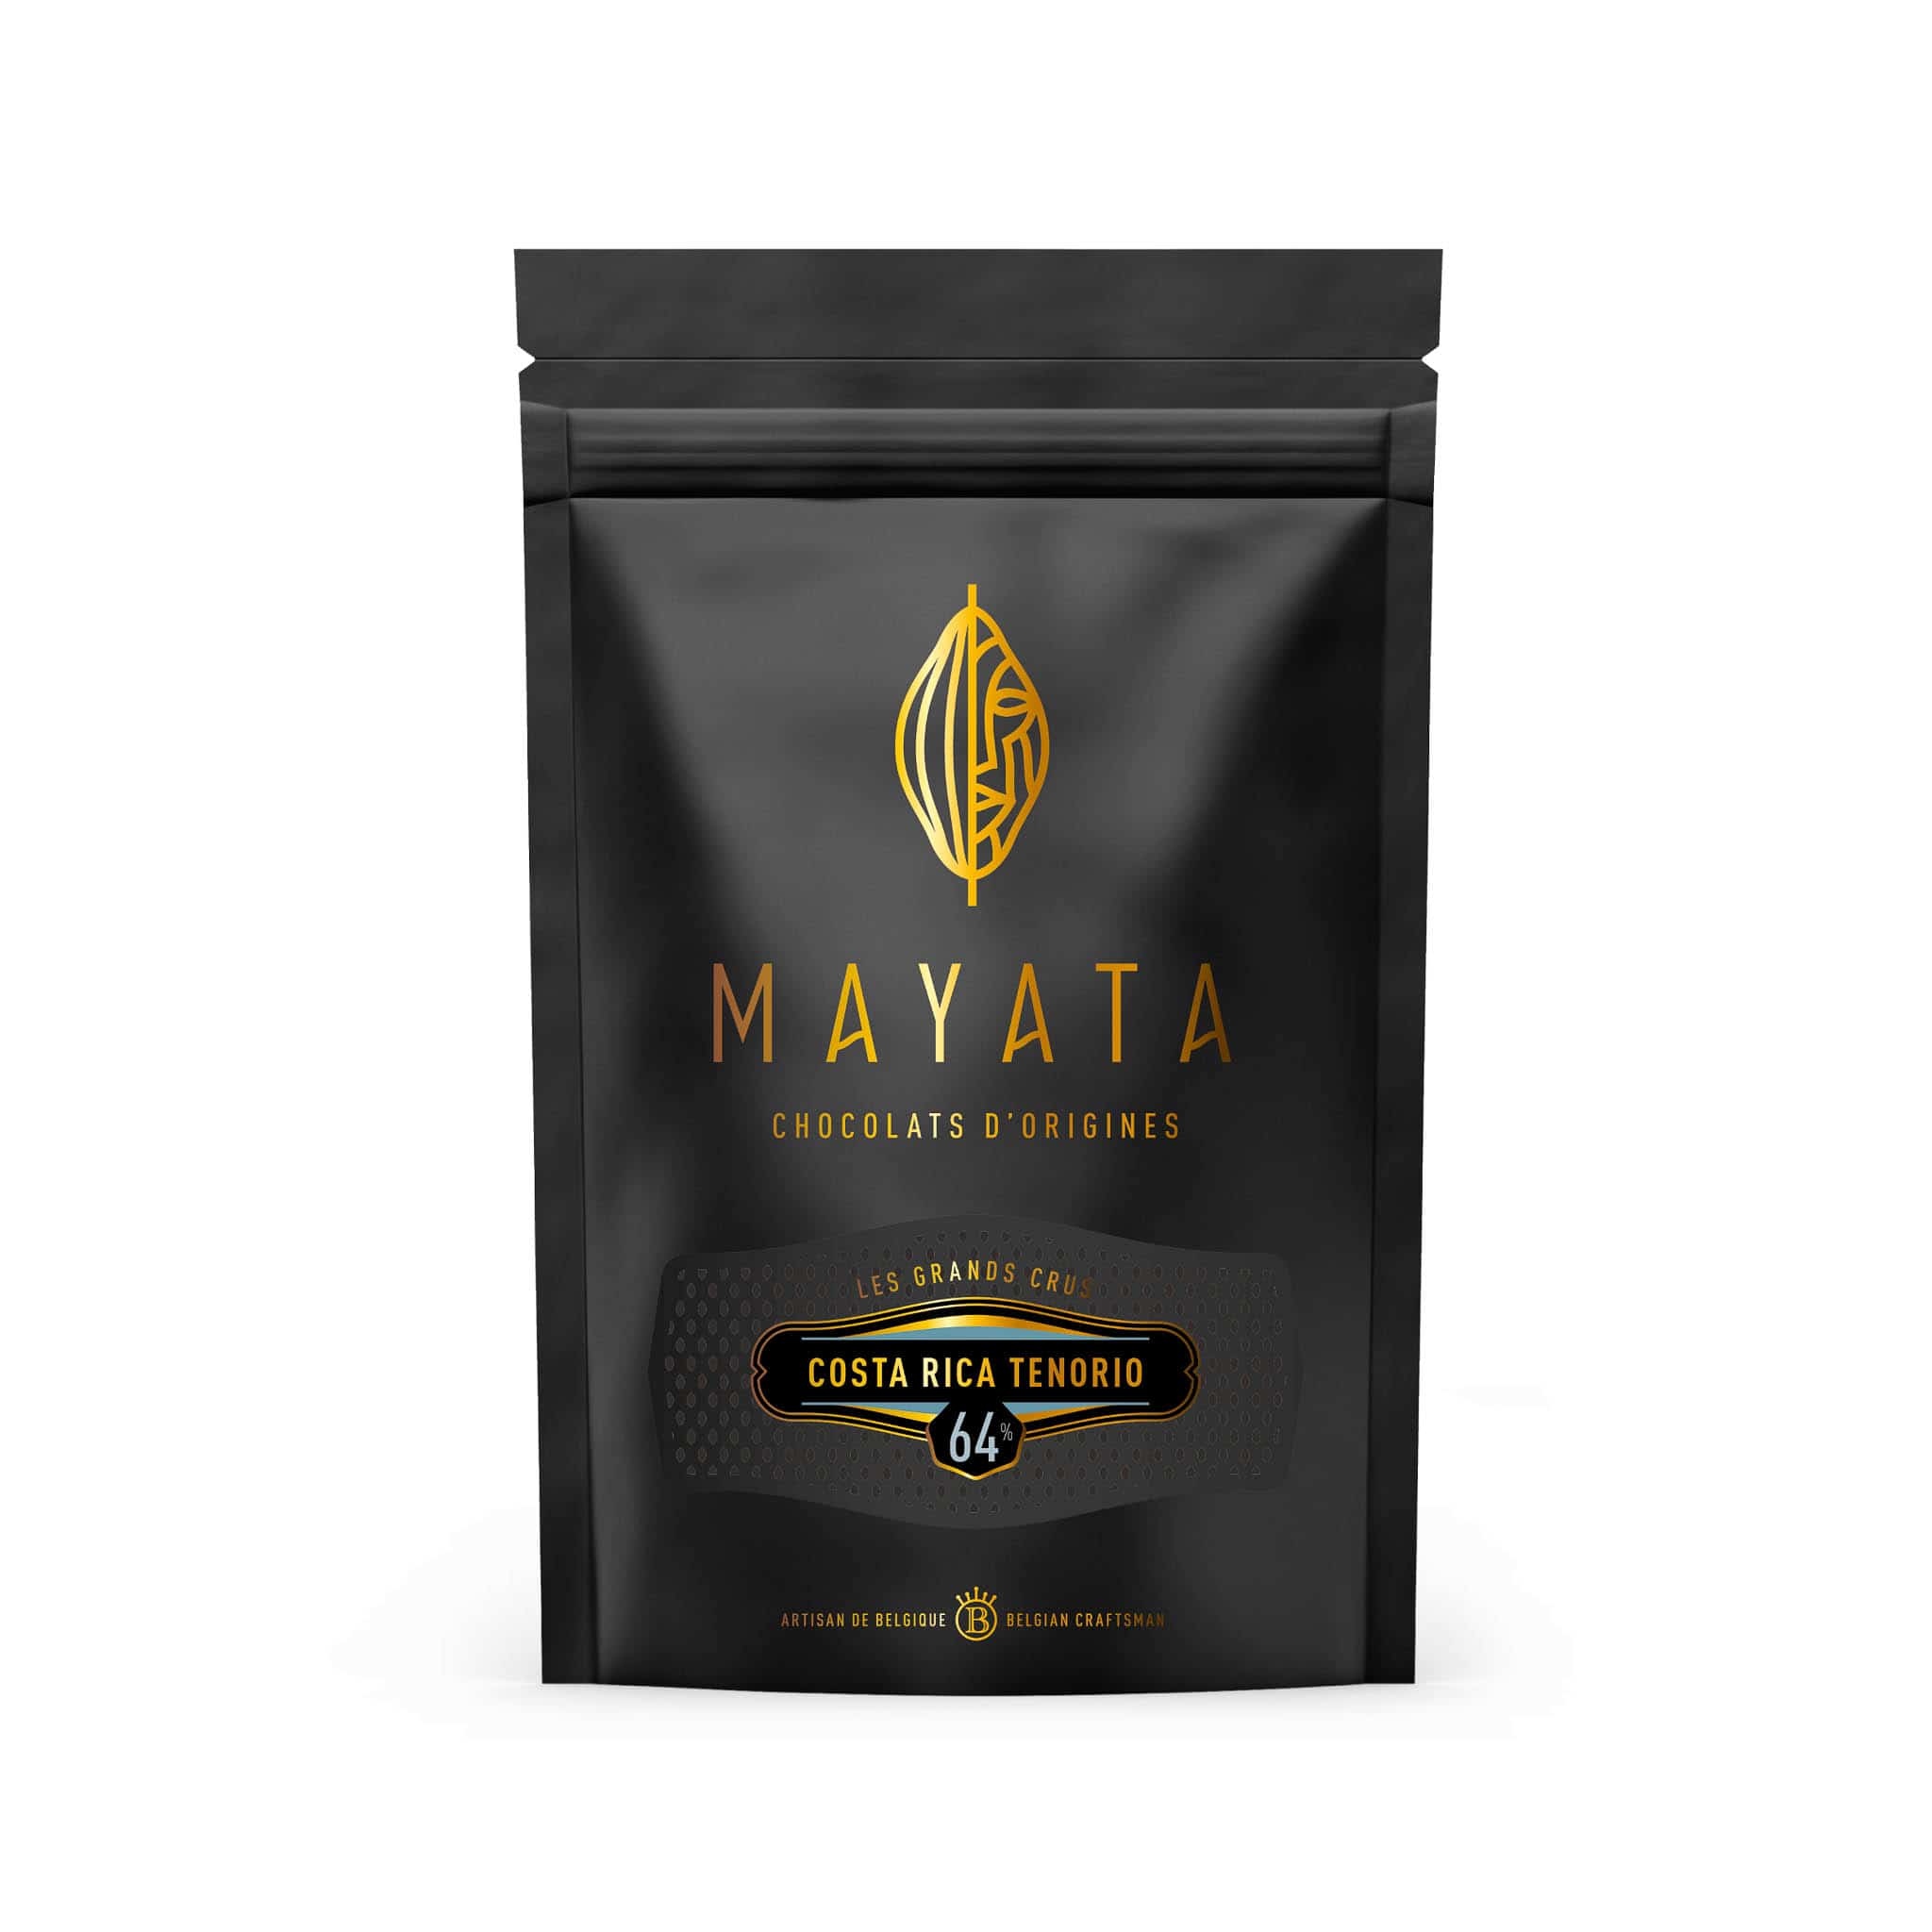 Mayata Single Origin Costa Rica Tenorio Dark Chocolate Couverture 64%, 1kg